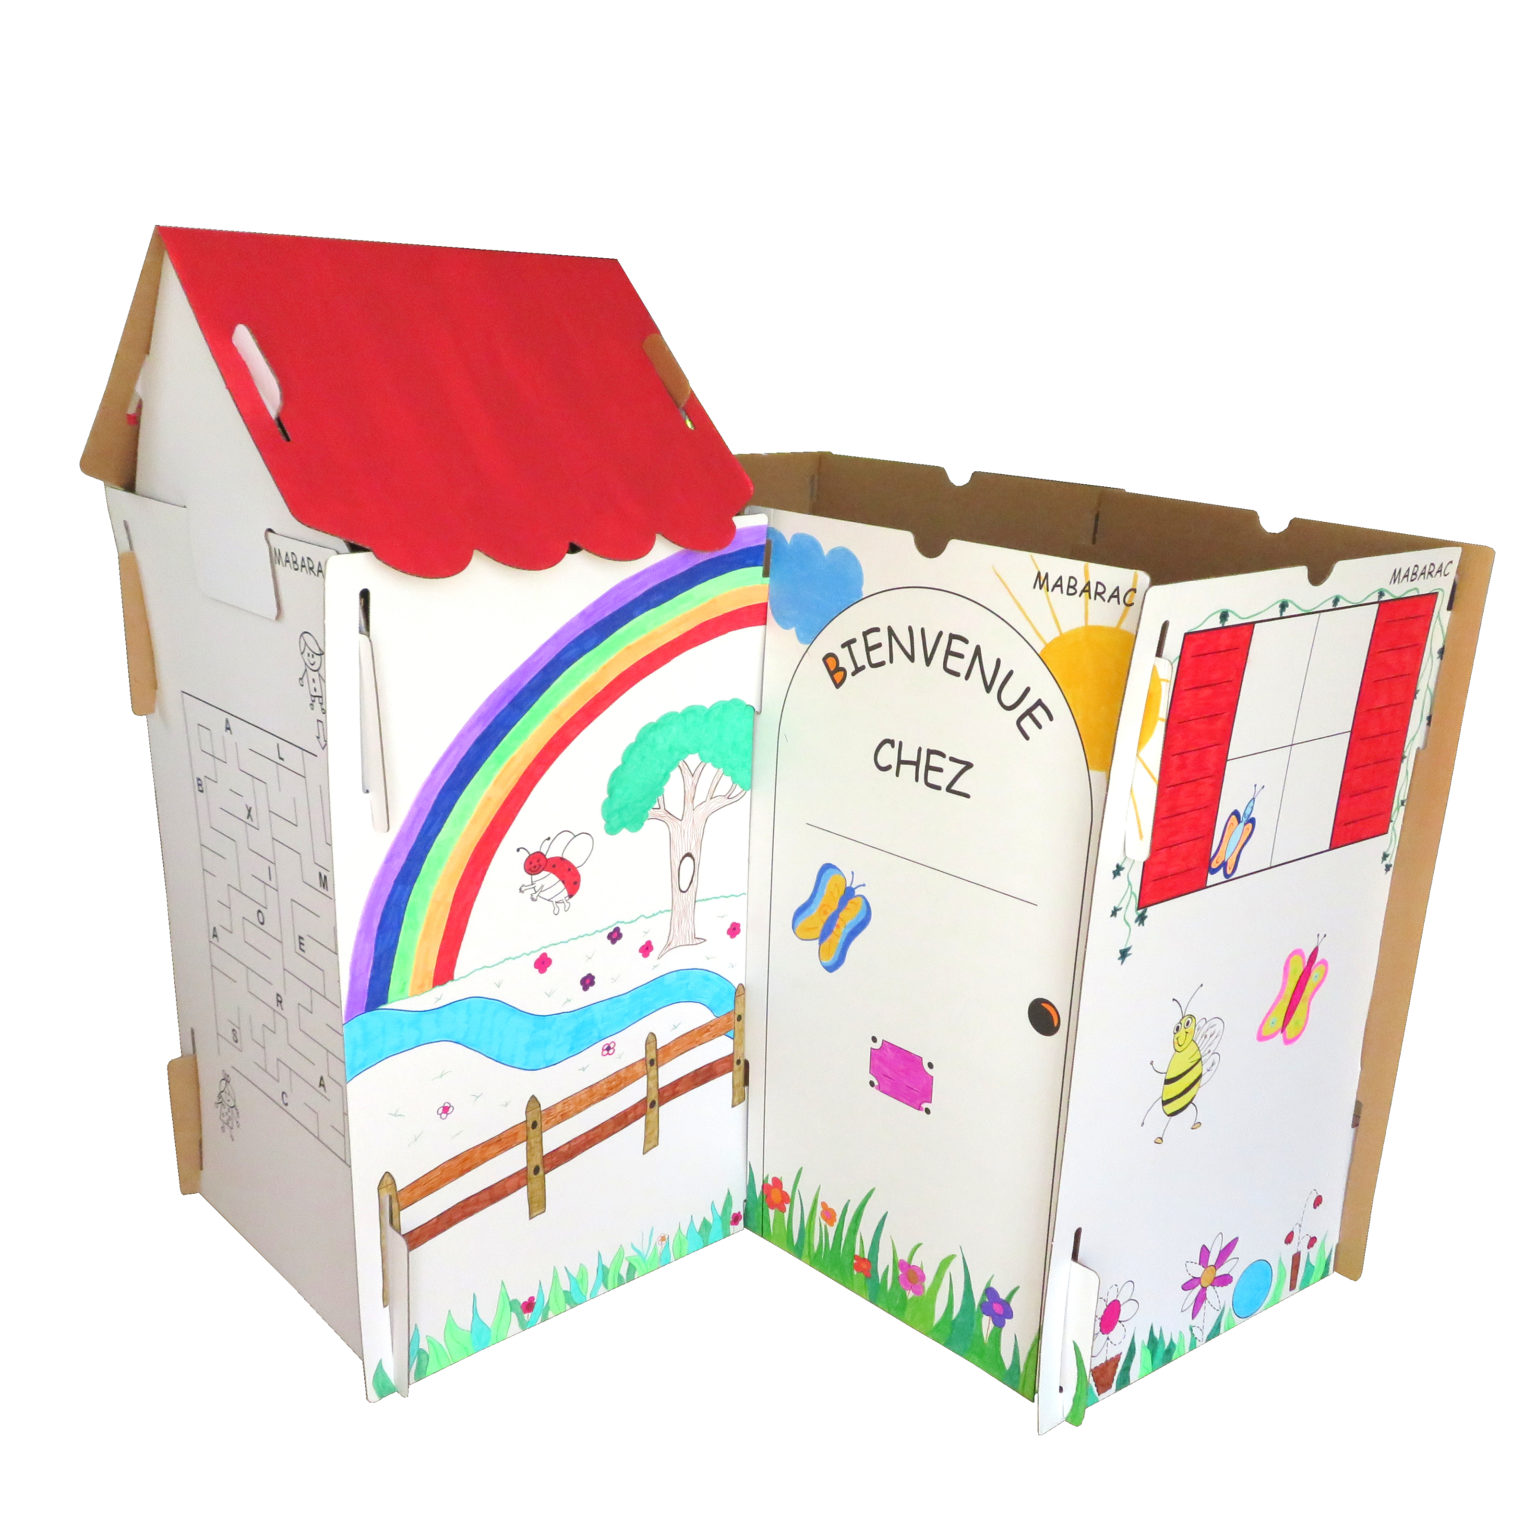 Cabane modulable Mabarac décorée en carton avec un toit